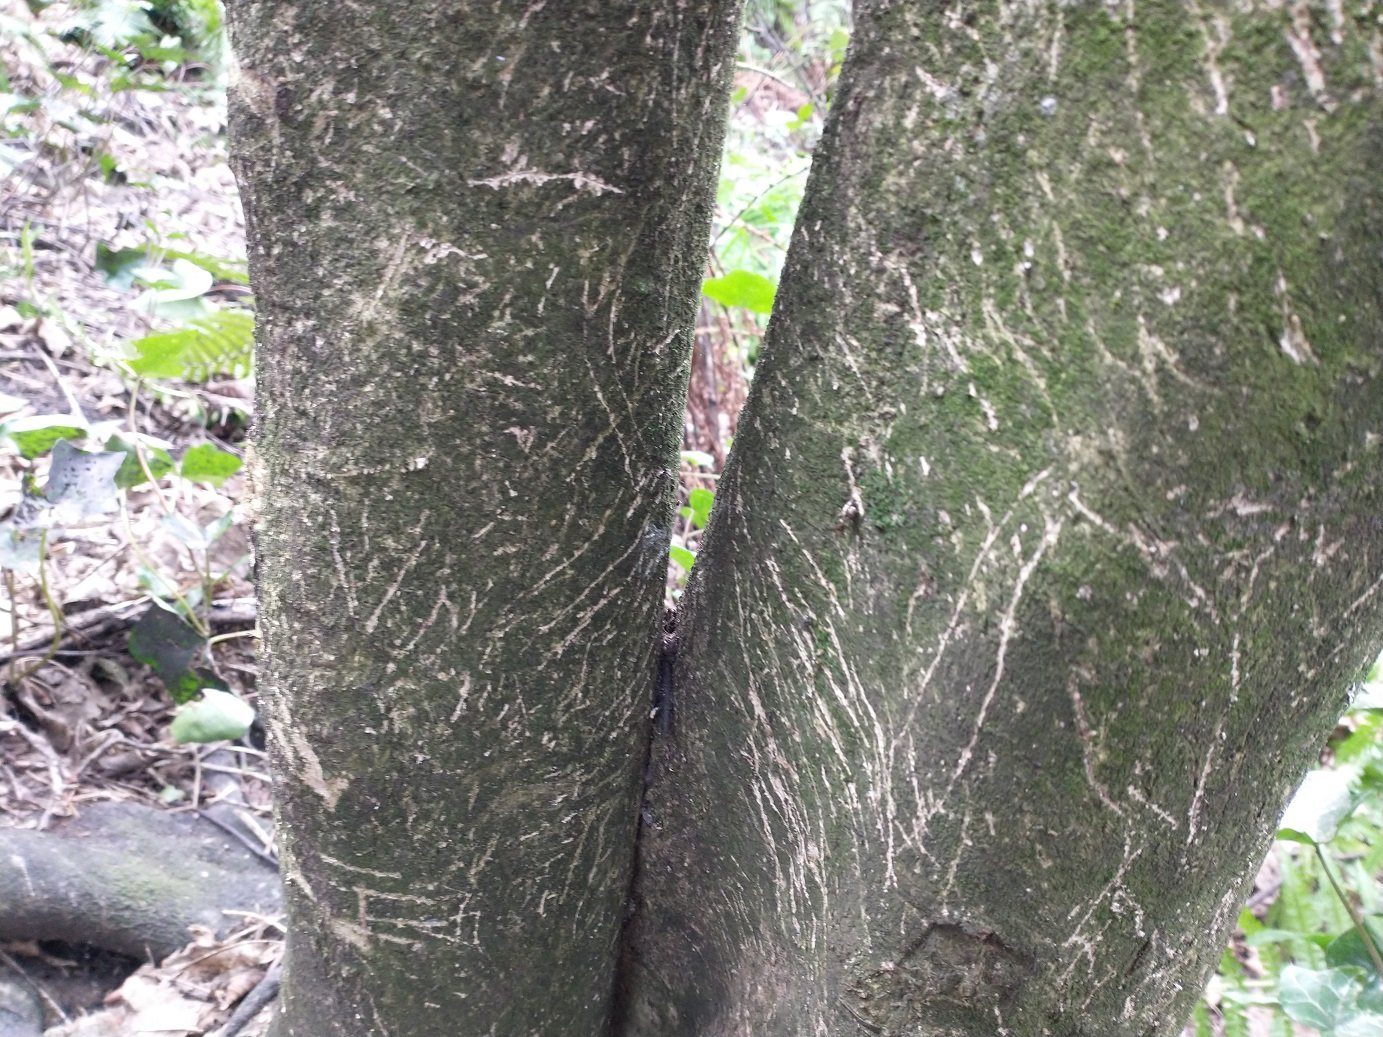 Possum scratches on tree.